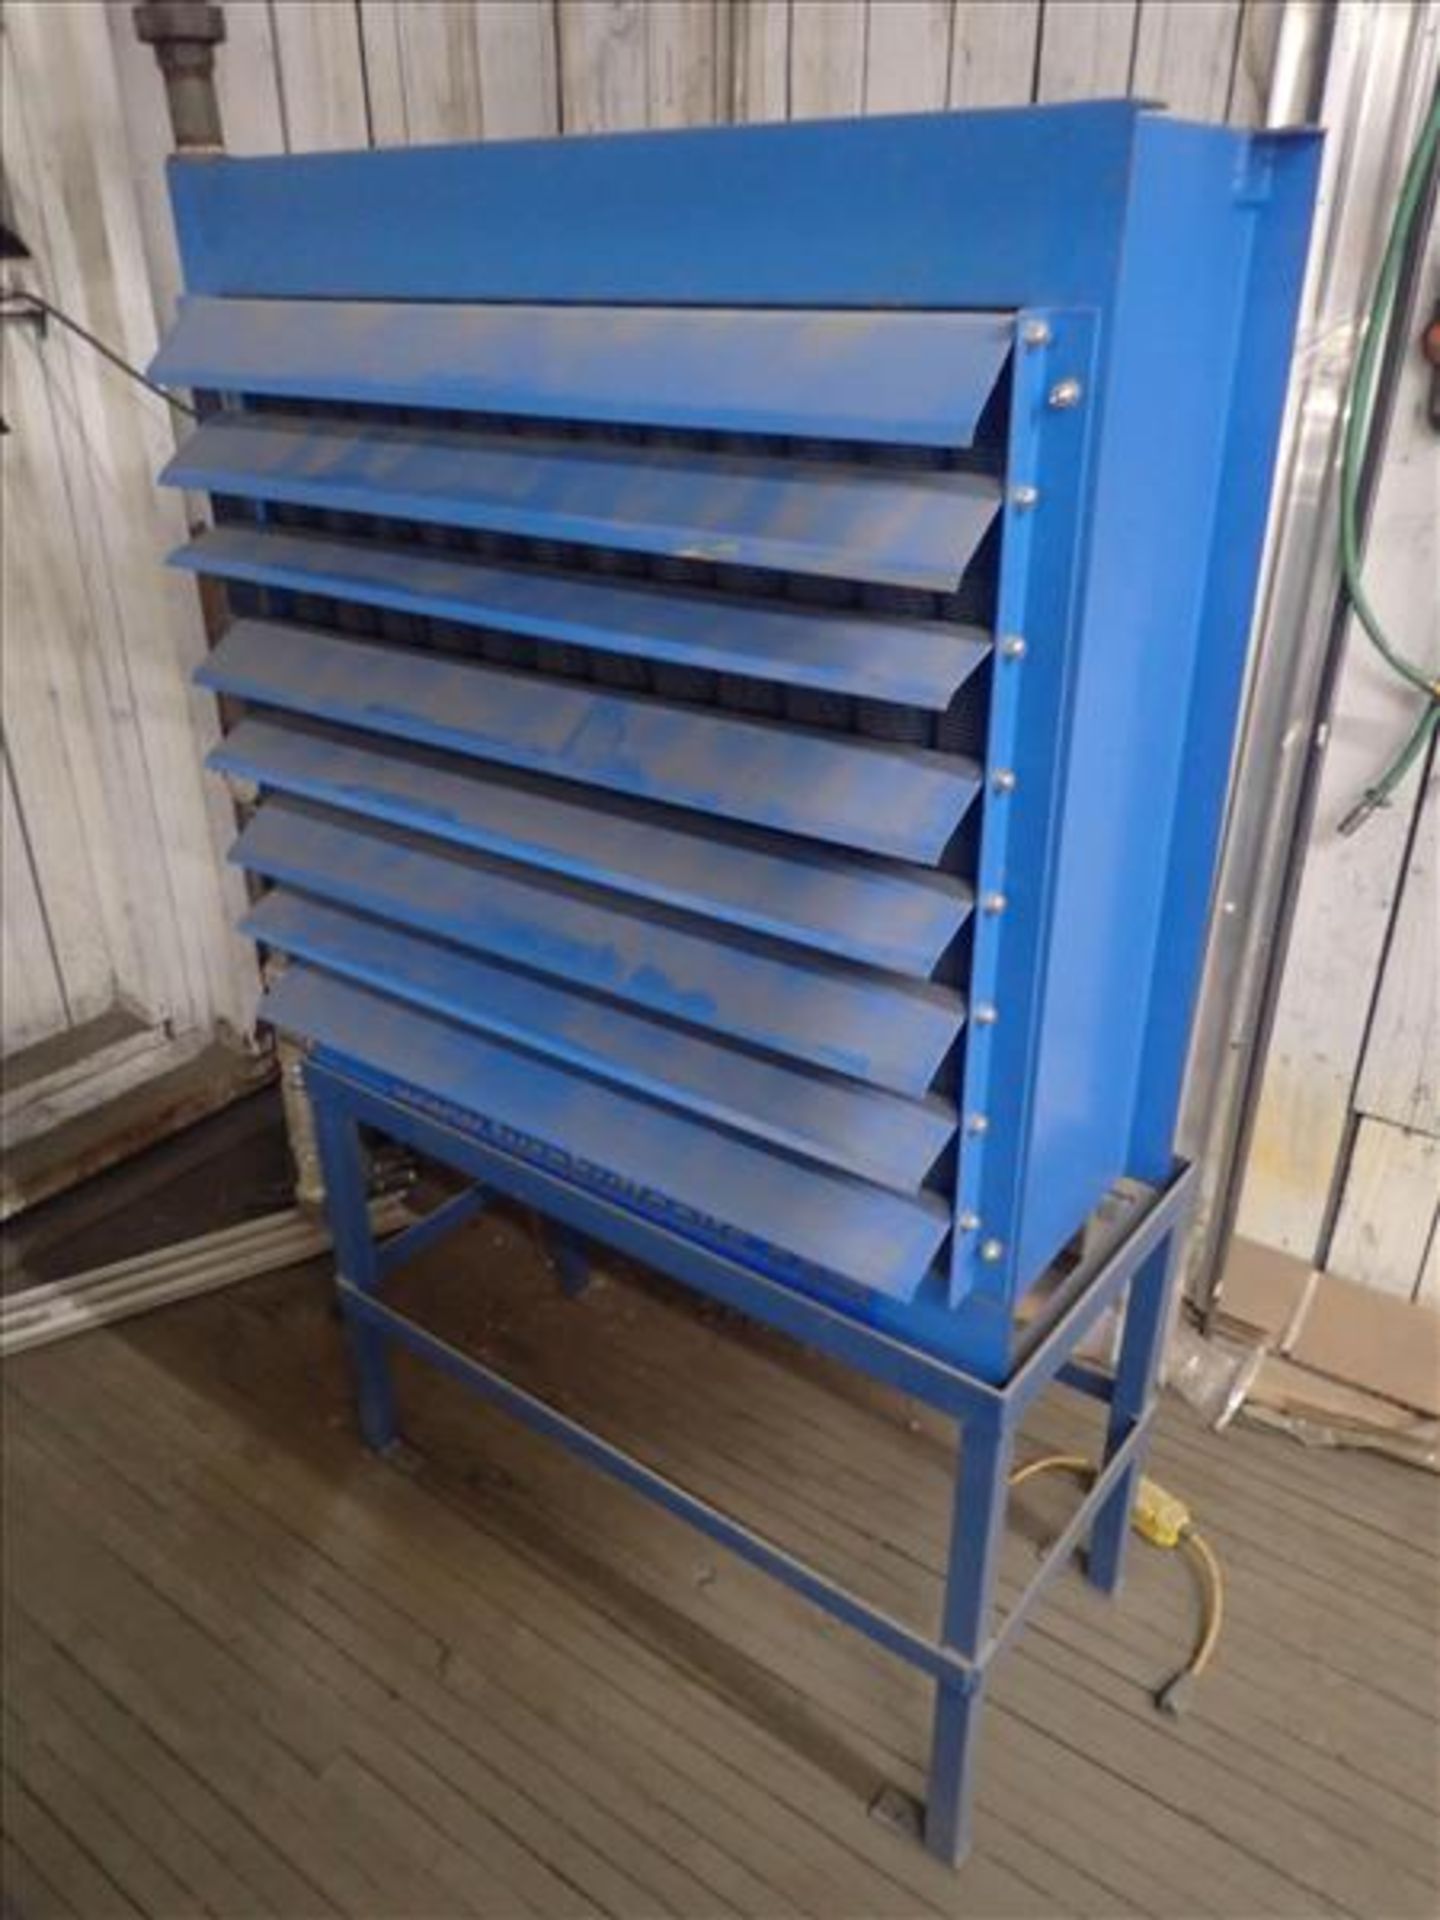 Turnbull Coils heating unit, mod. OH03681.6C, ser. no. TS910 (Tag 8802 Loc Mill Carp Shop)